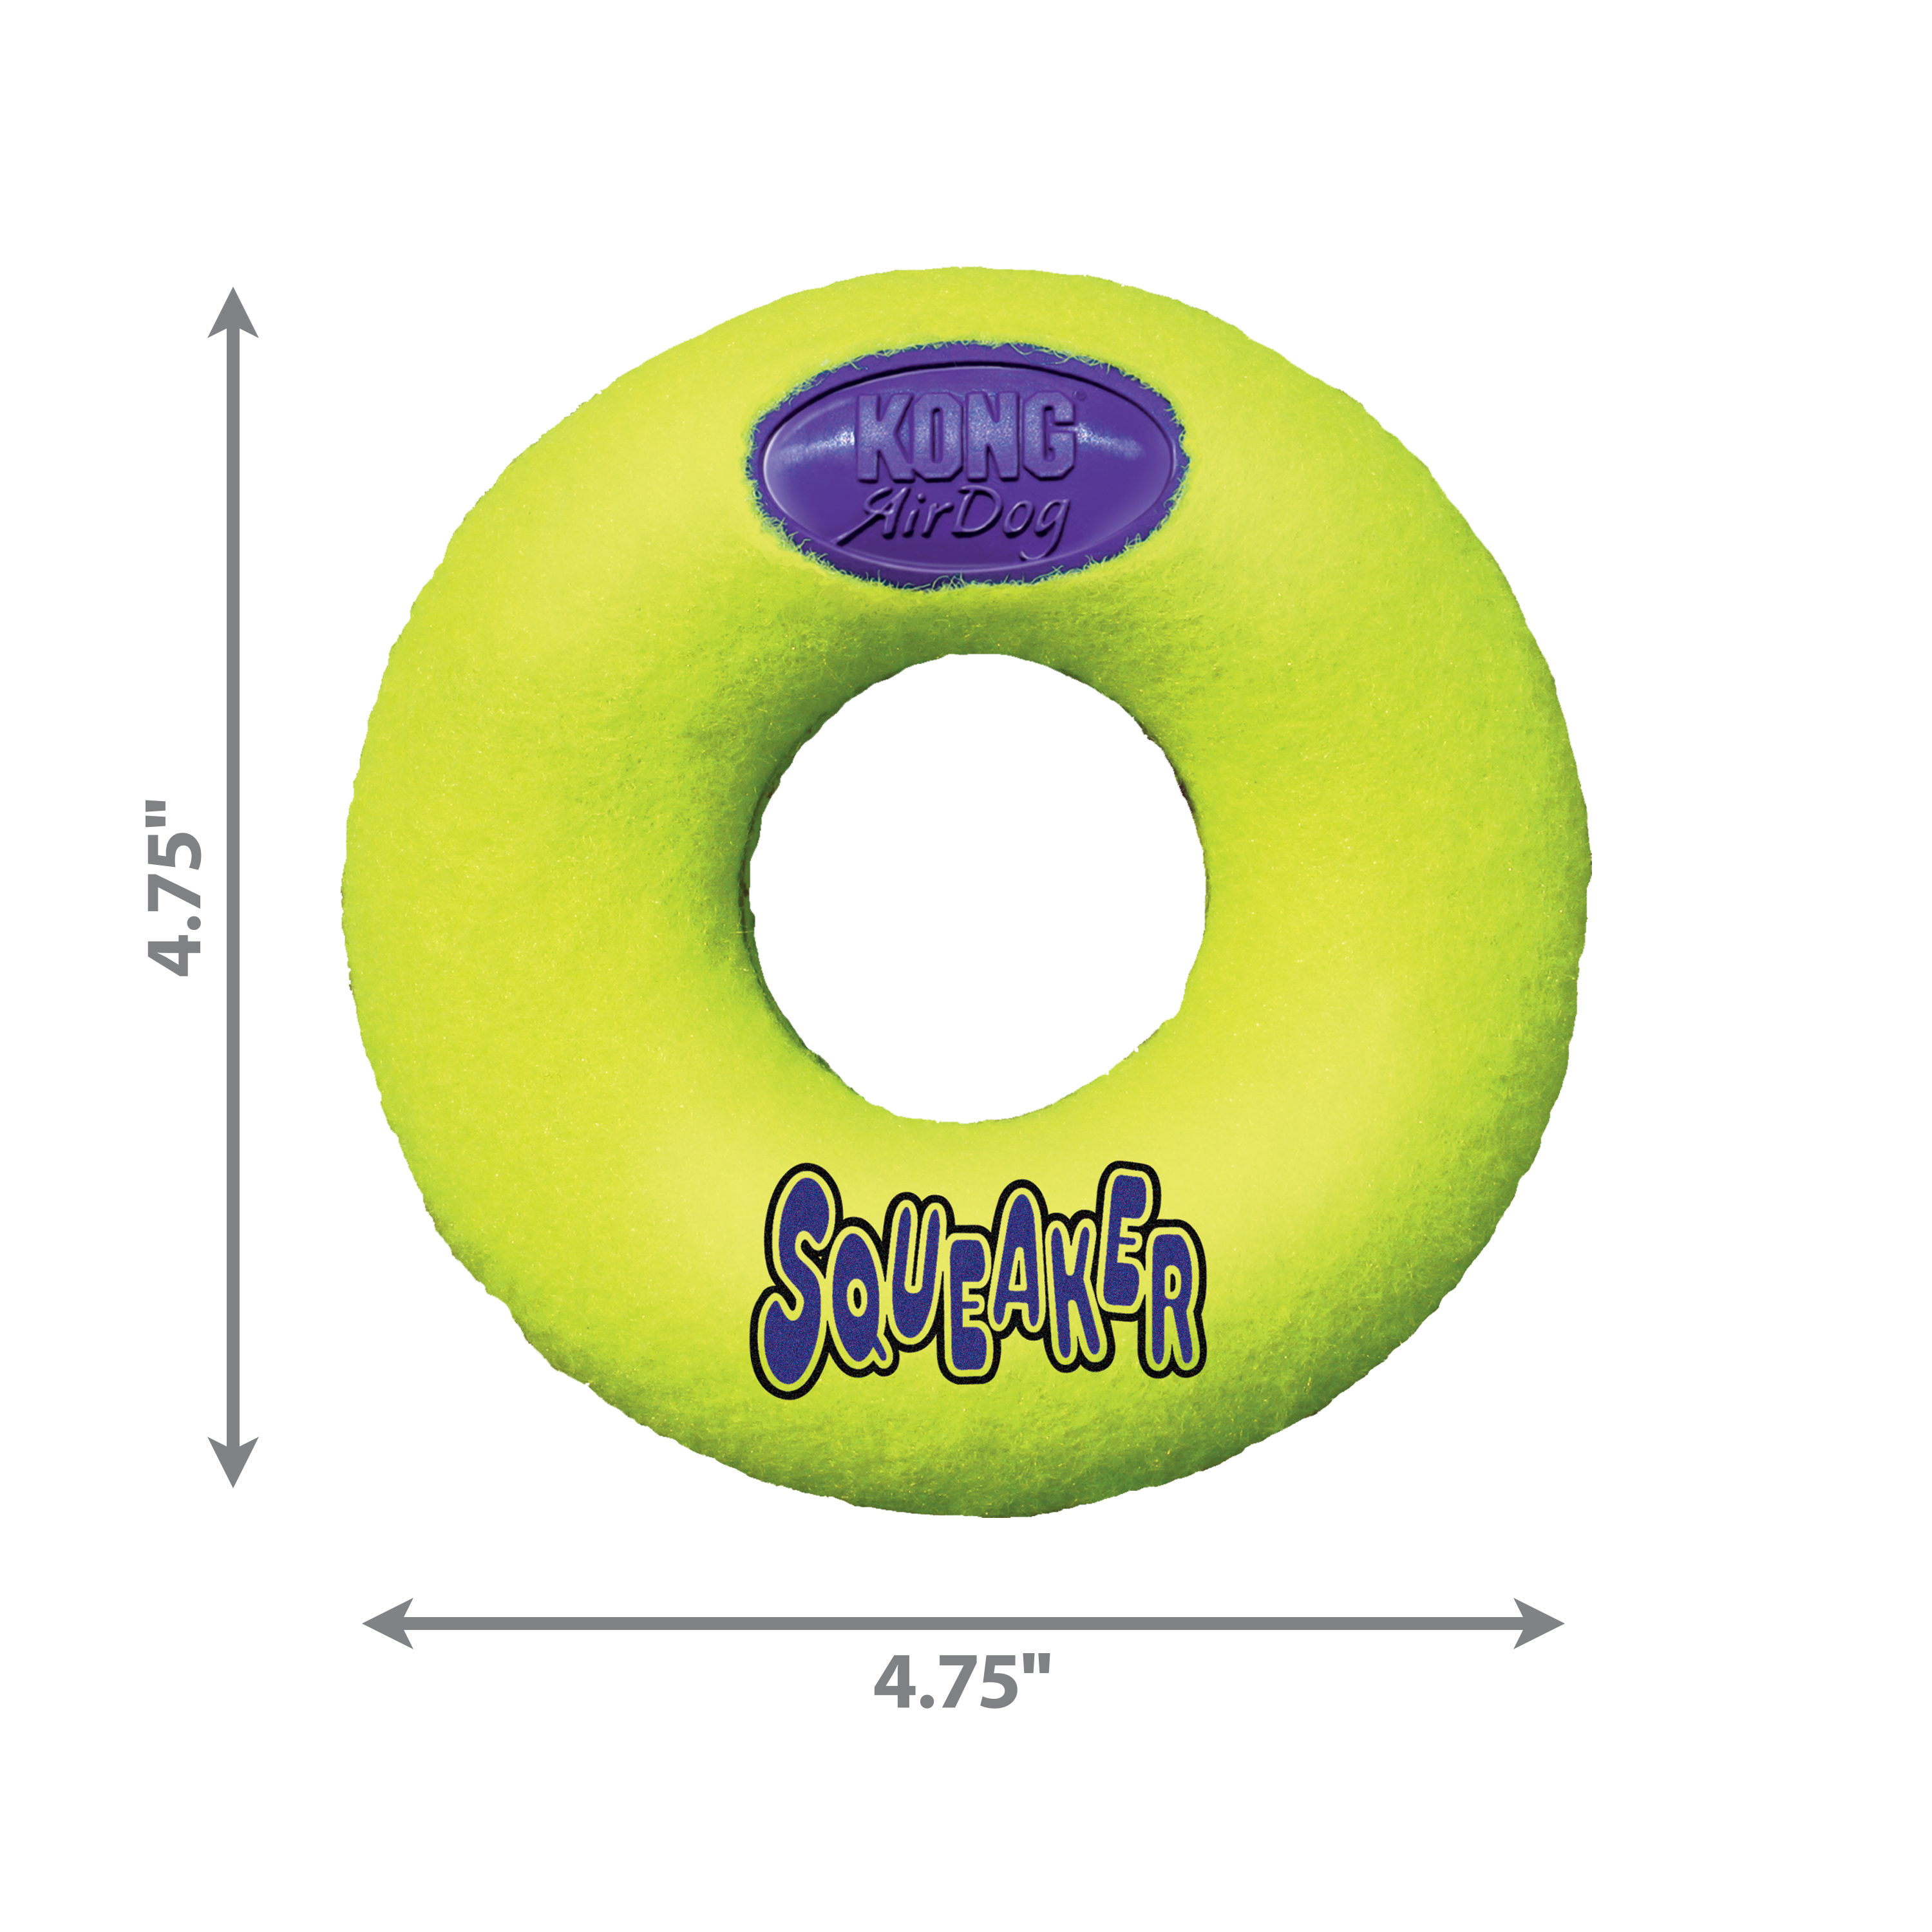 AirDog Donut dimoffpack termékkép